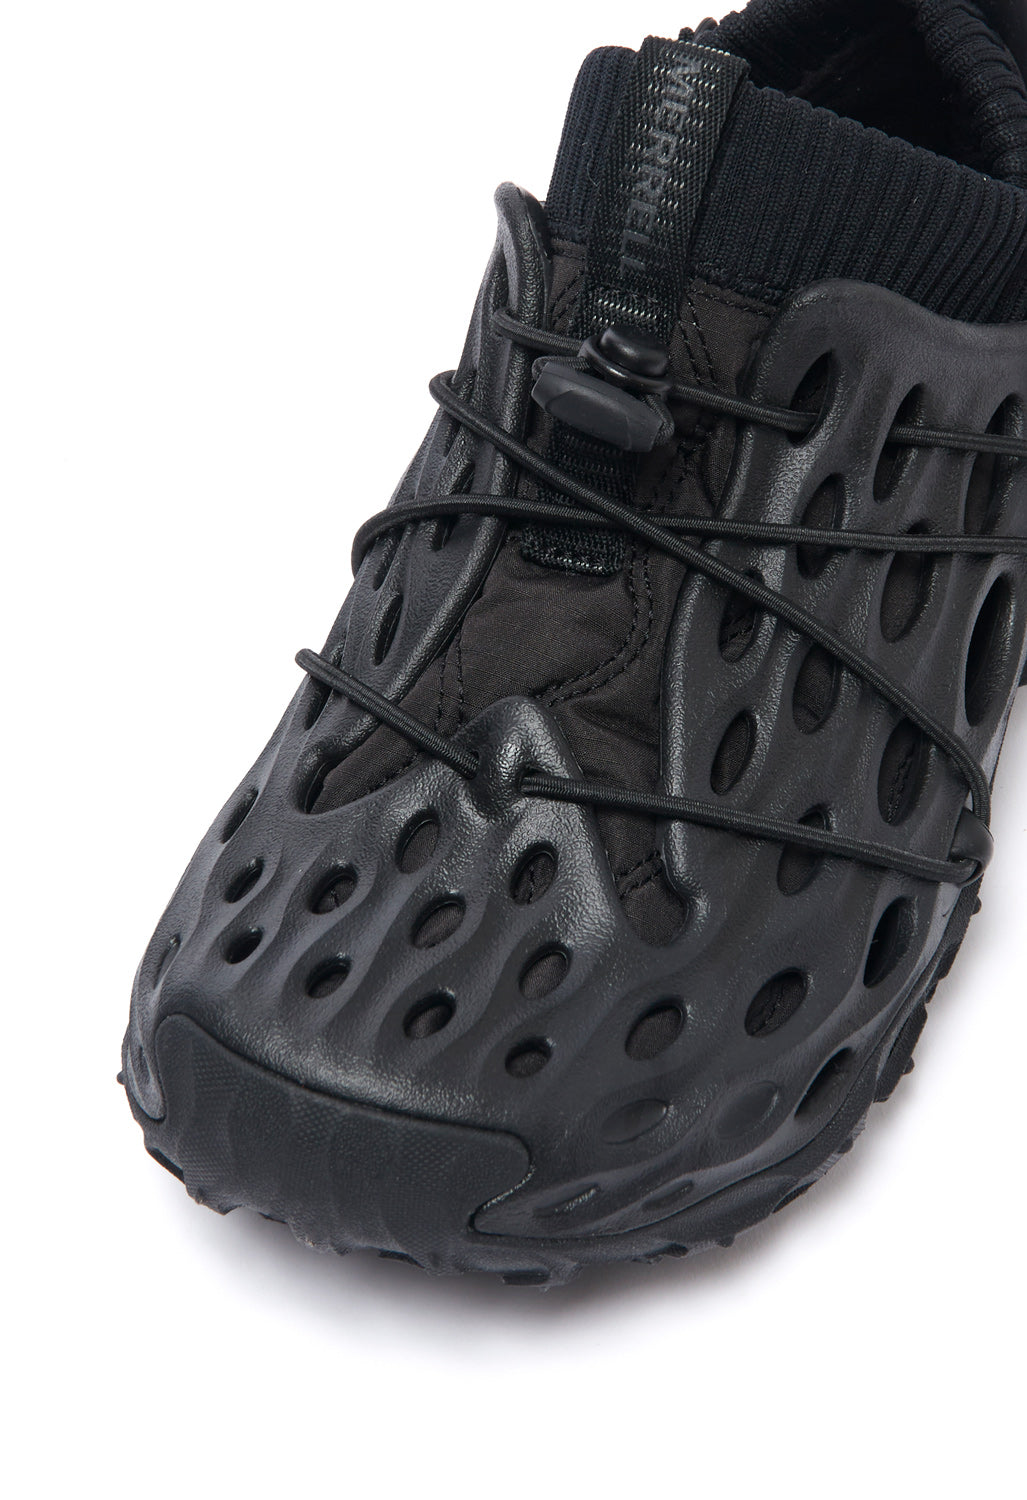 Merrell Hydro Moc AT Ripstop 1TRL Women's Shoes - Black